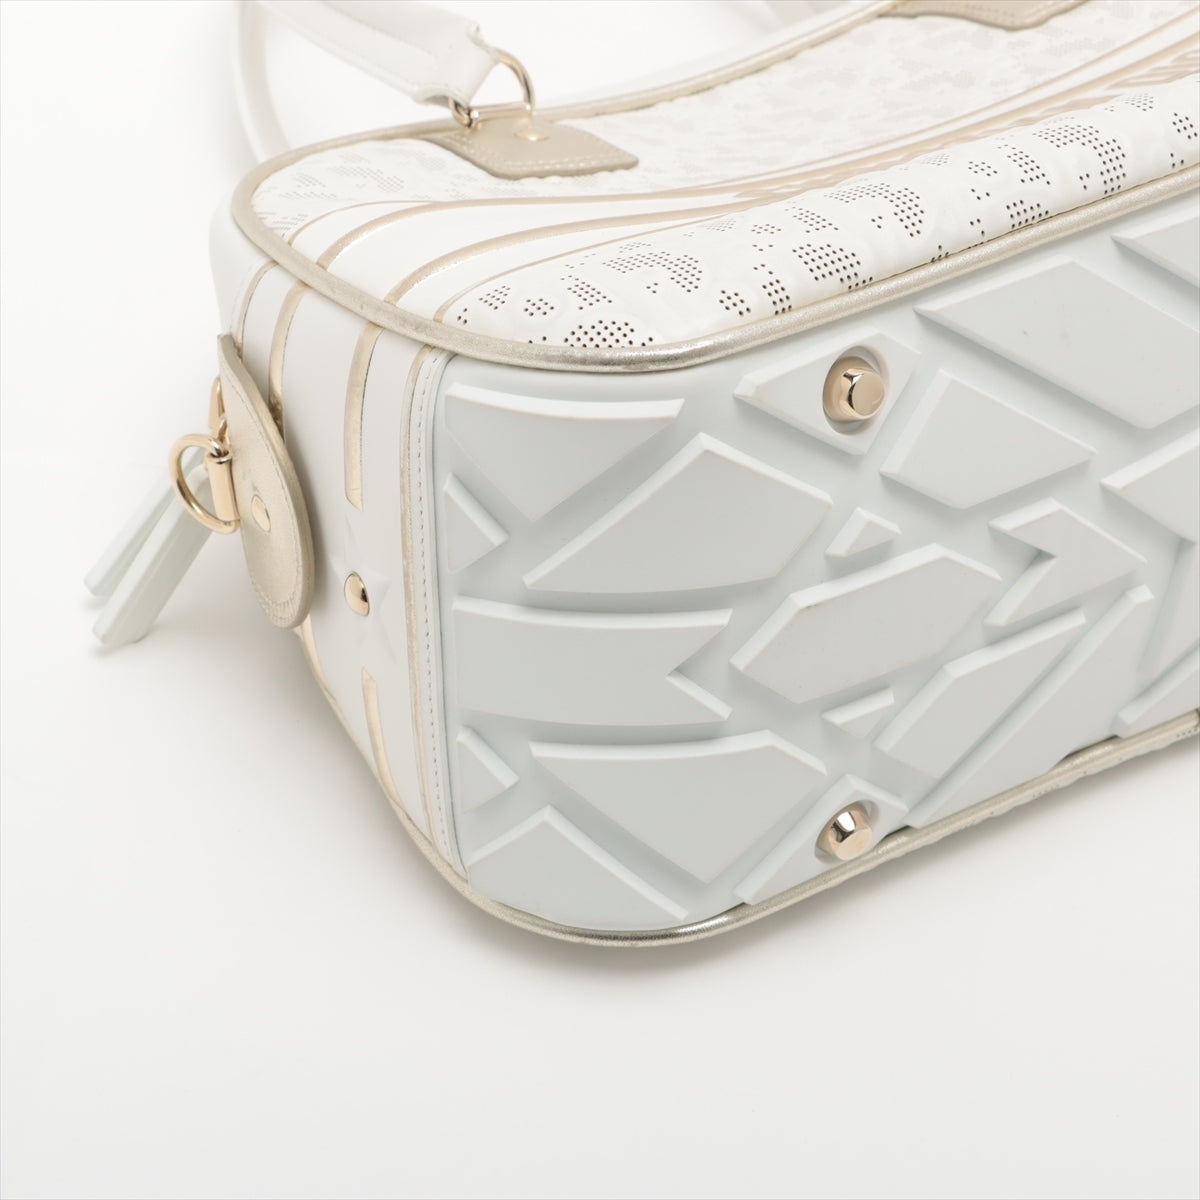 Christian Dior DIOR Vaib Leather 2way handbag White